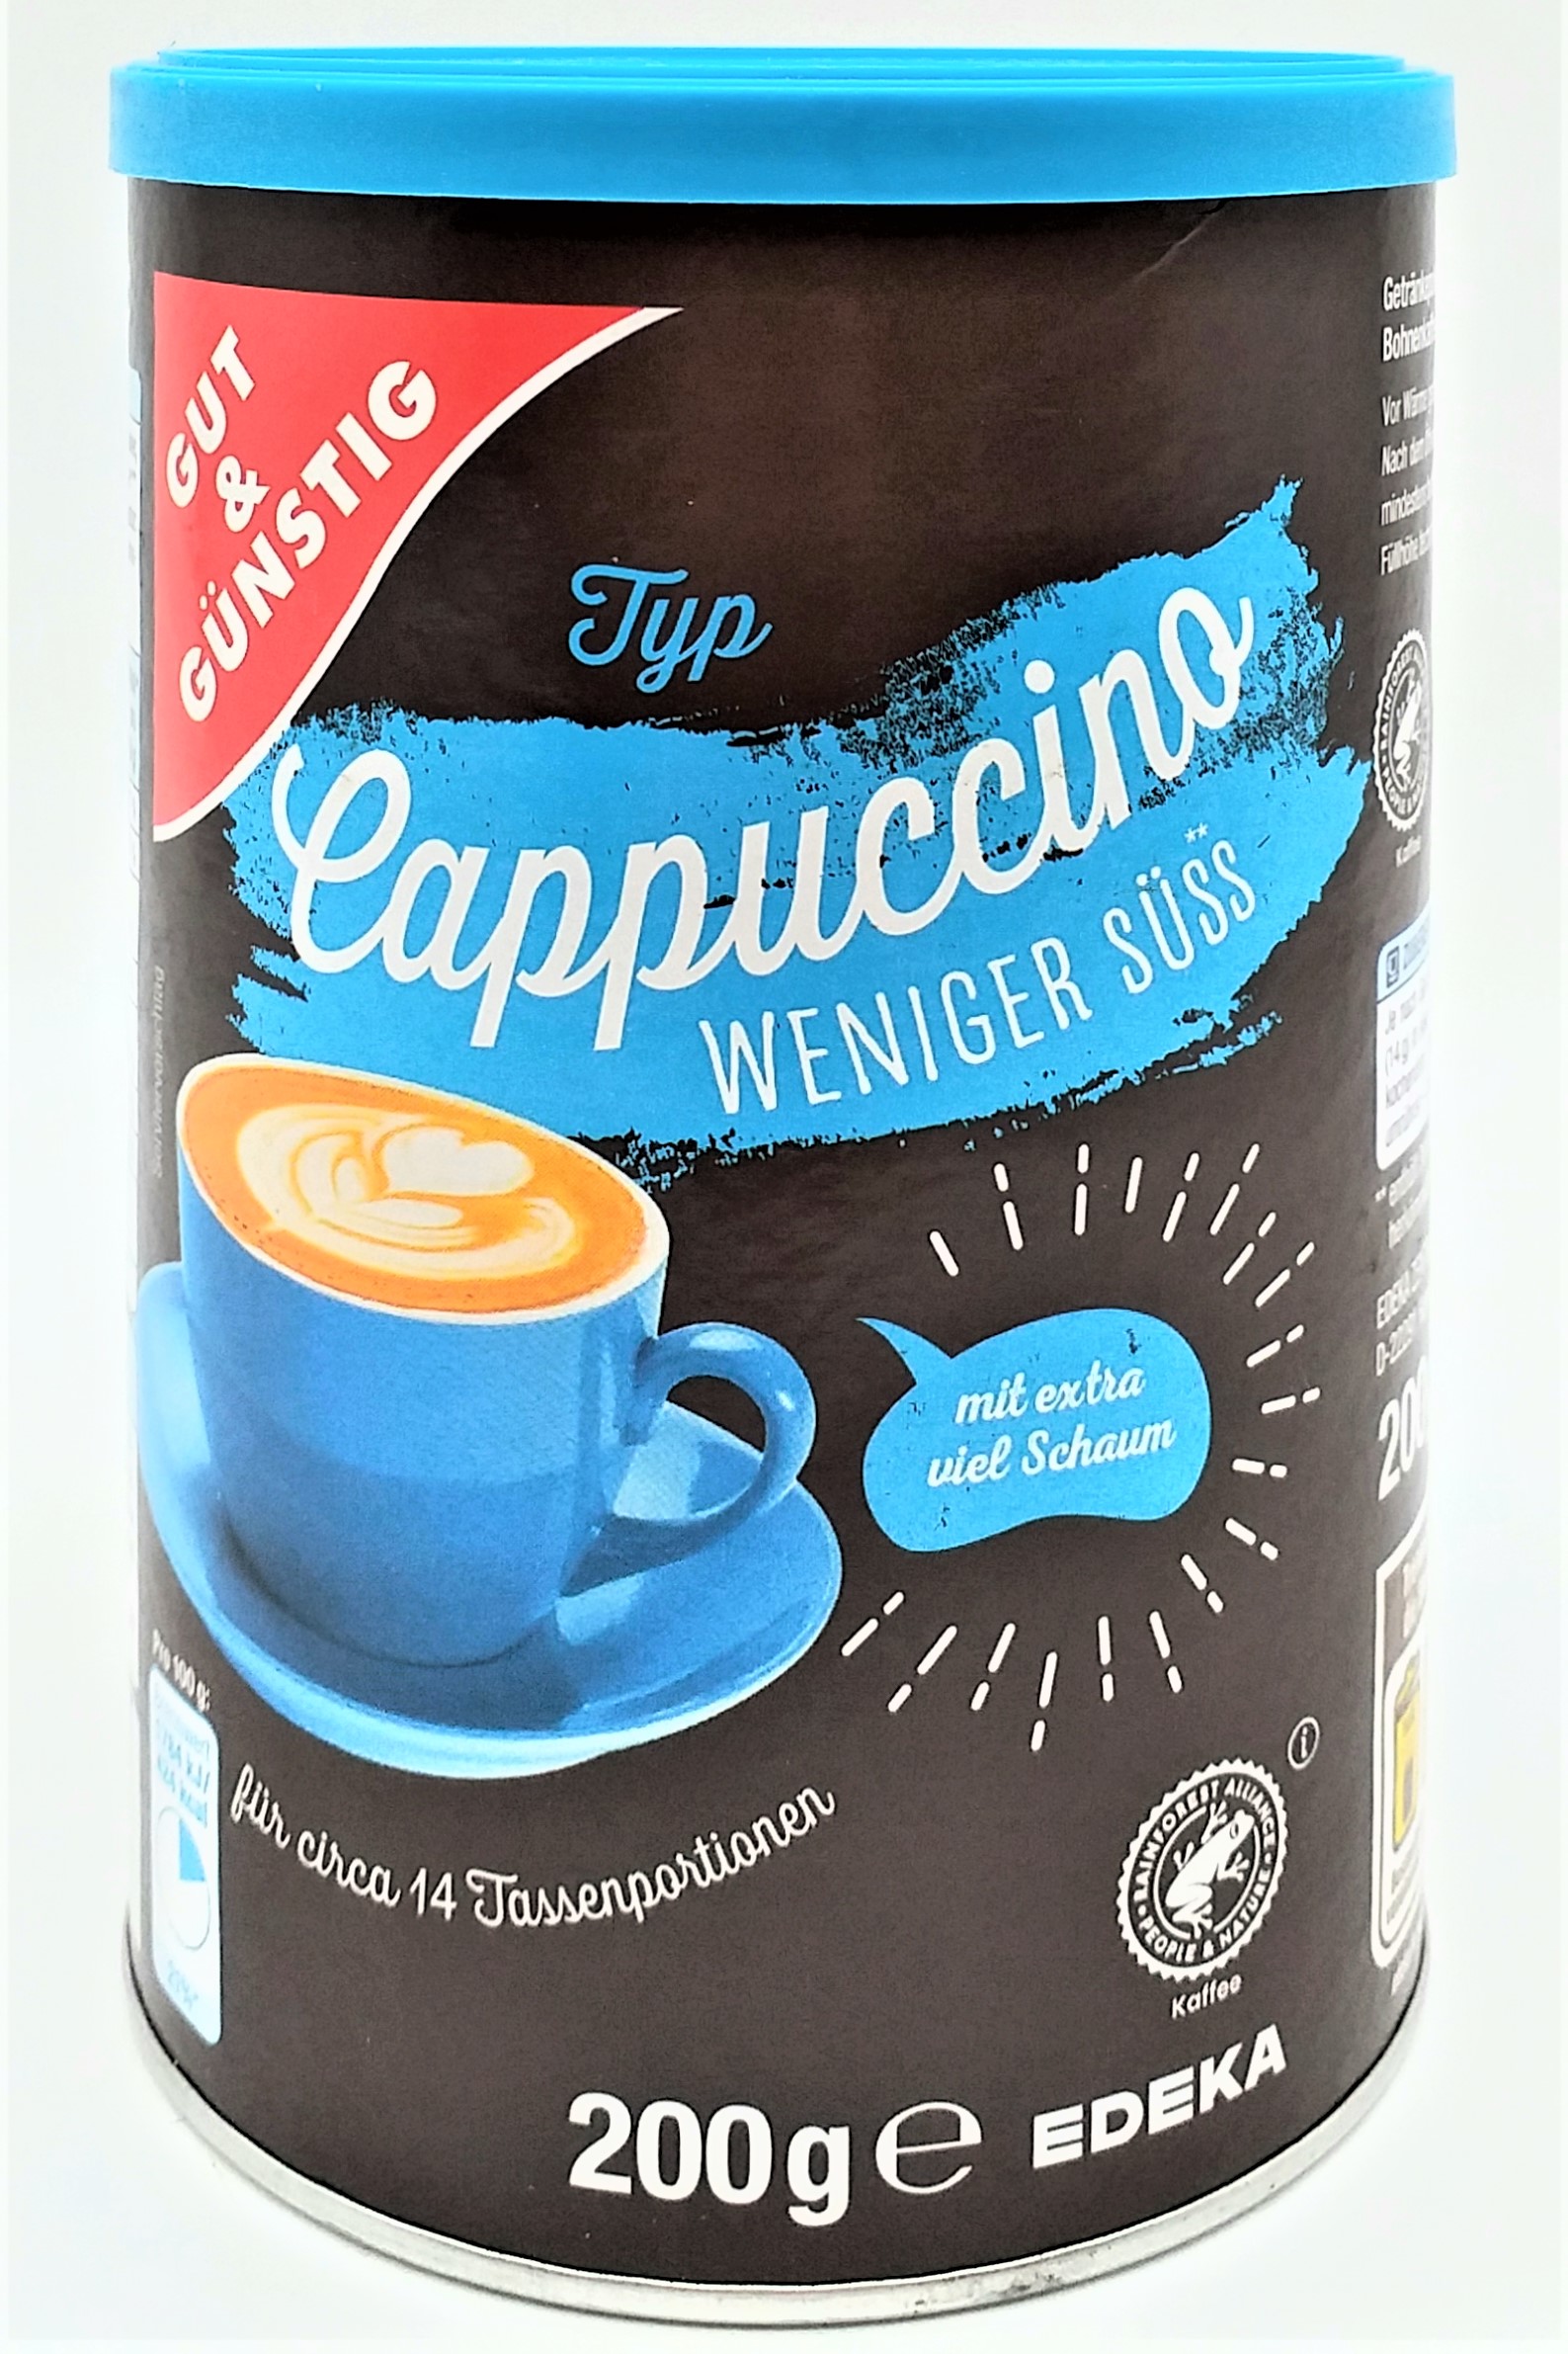 G&G Cappuccino weniger süß 200g